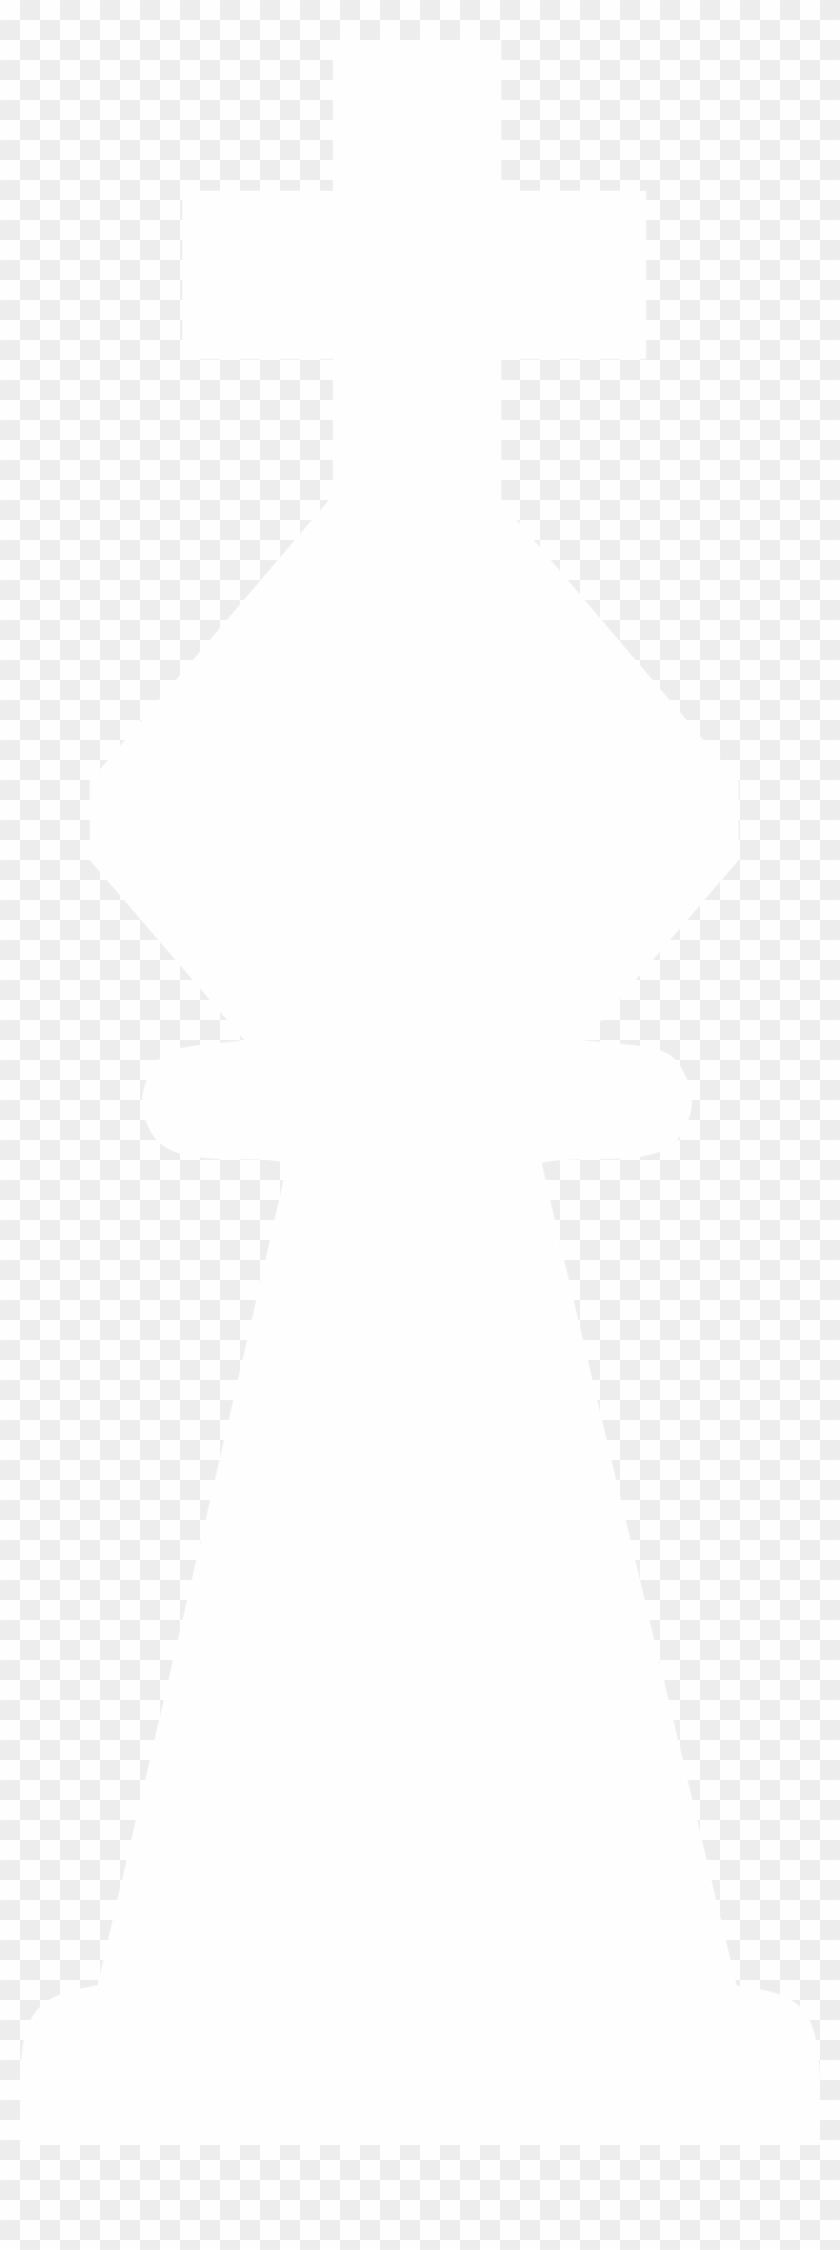 Big Image - King Chess Silhouette White #1266555